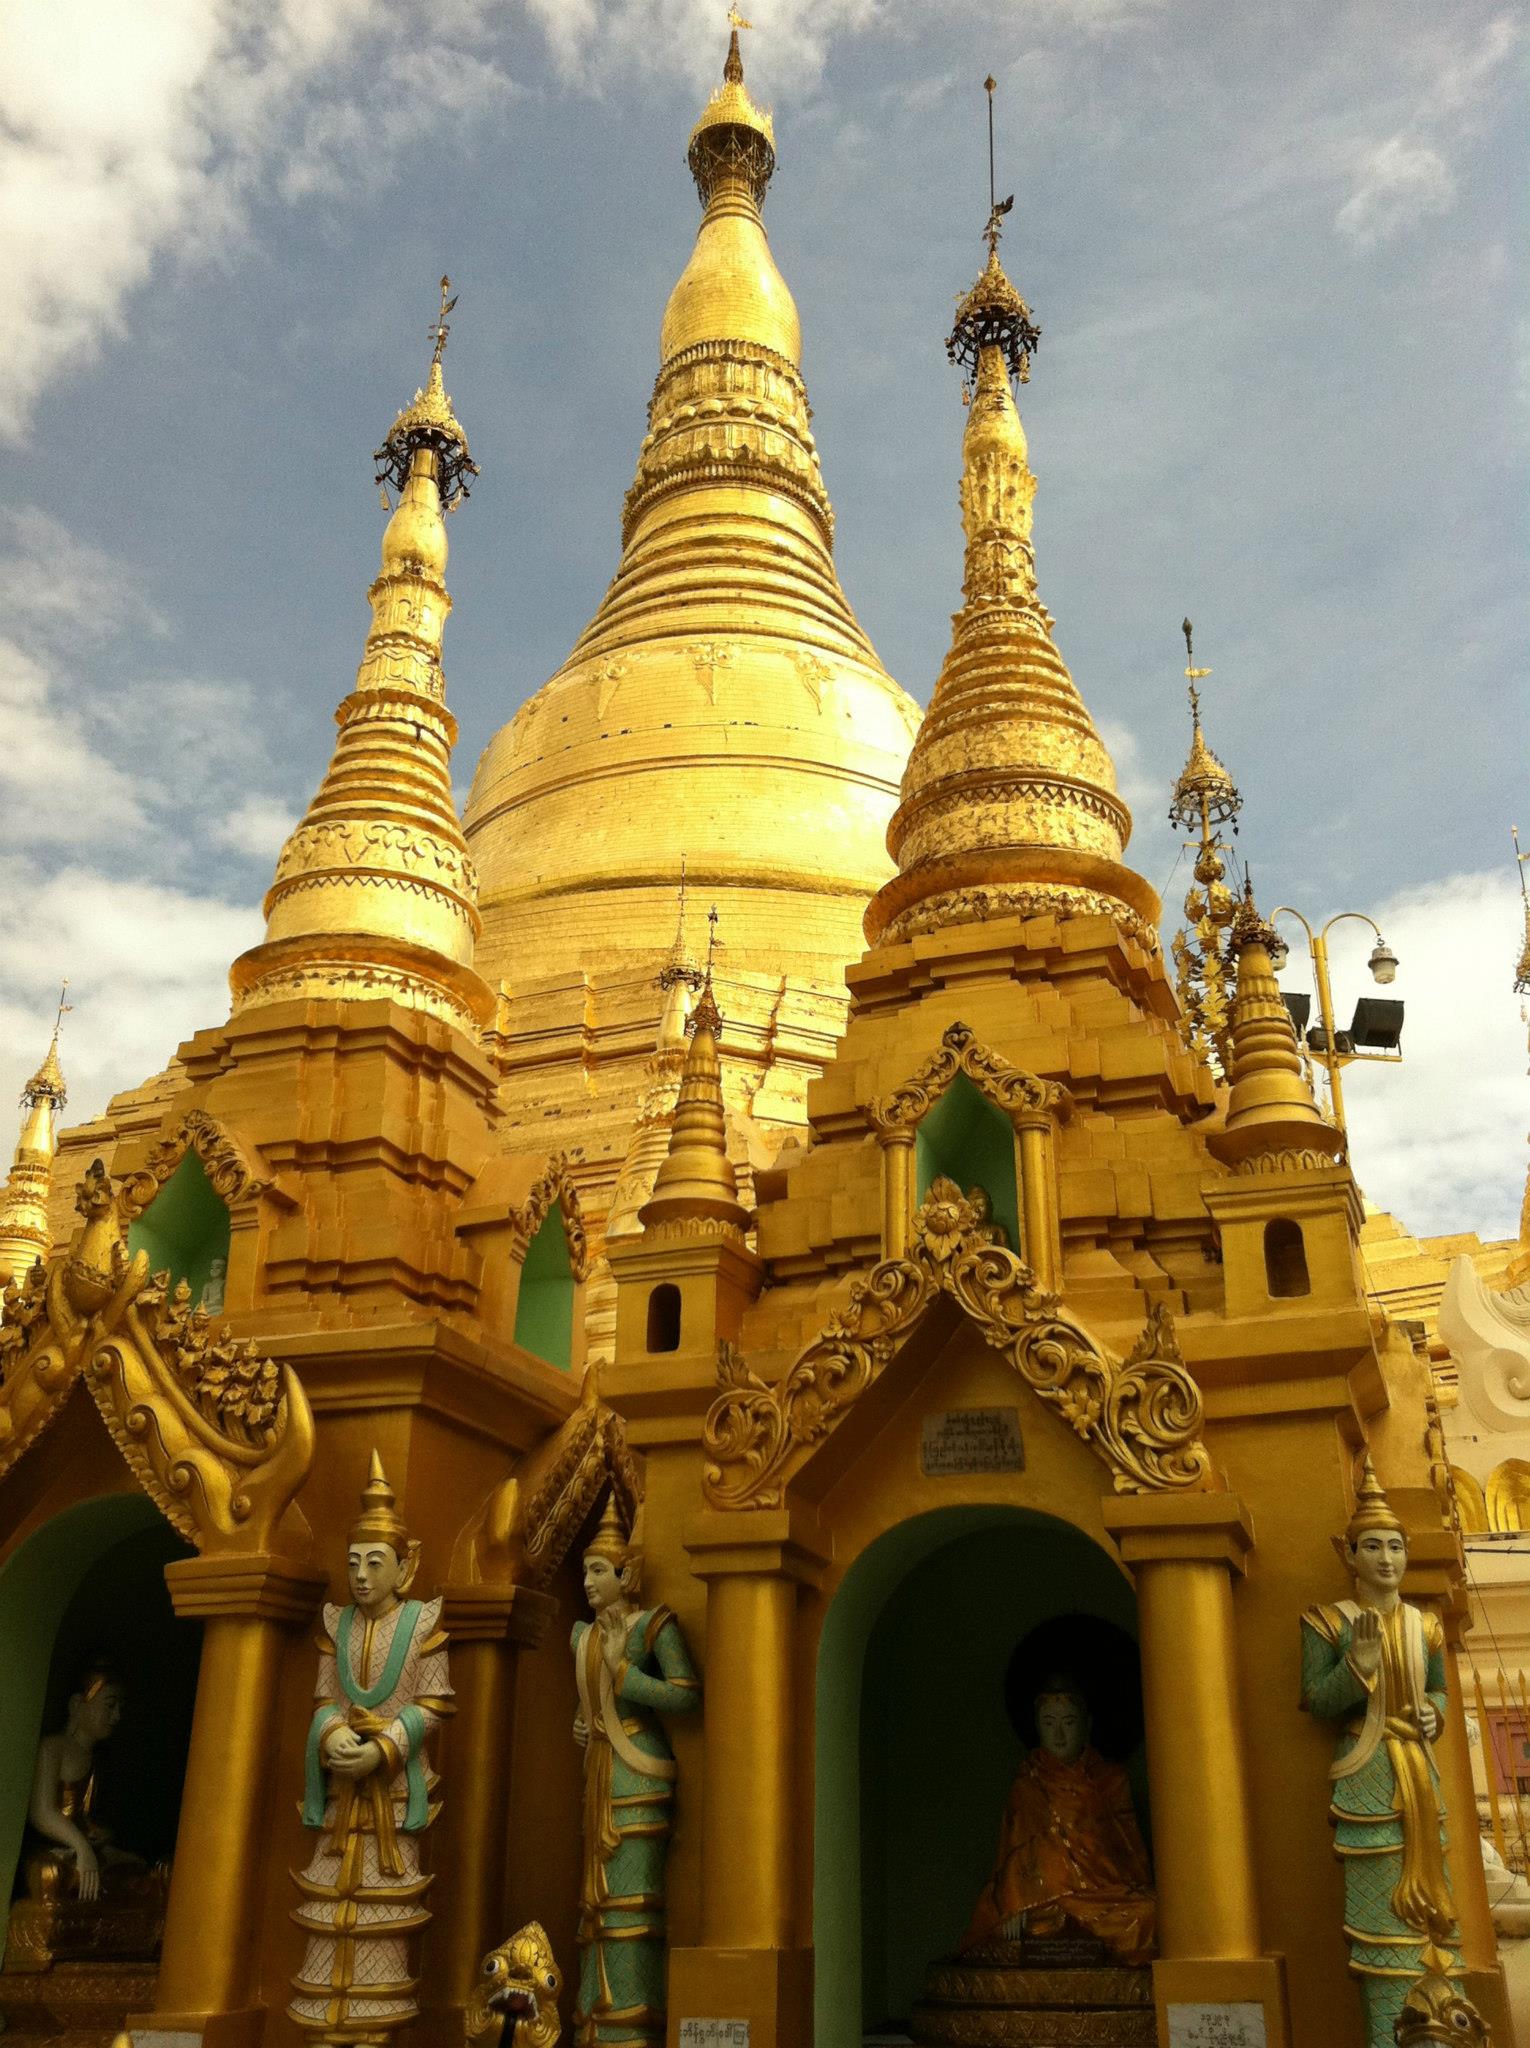 Yangon, Myanmar, and Schwedagon “The Golden Temple”